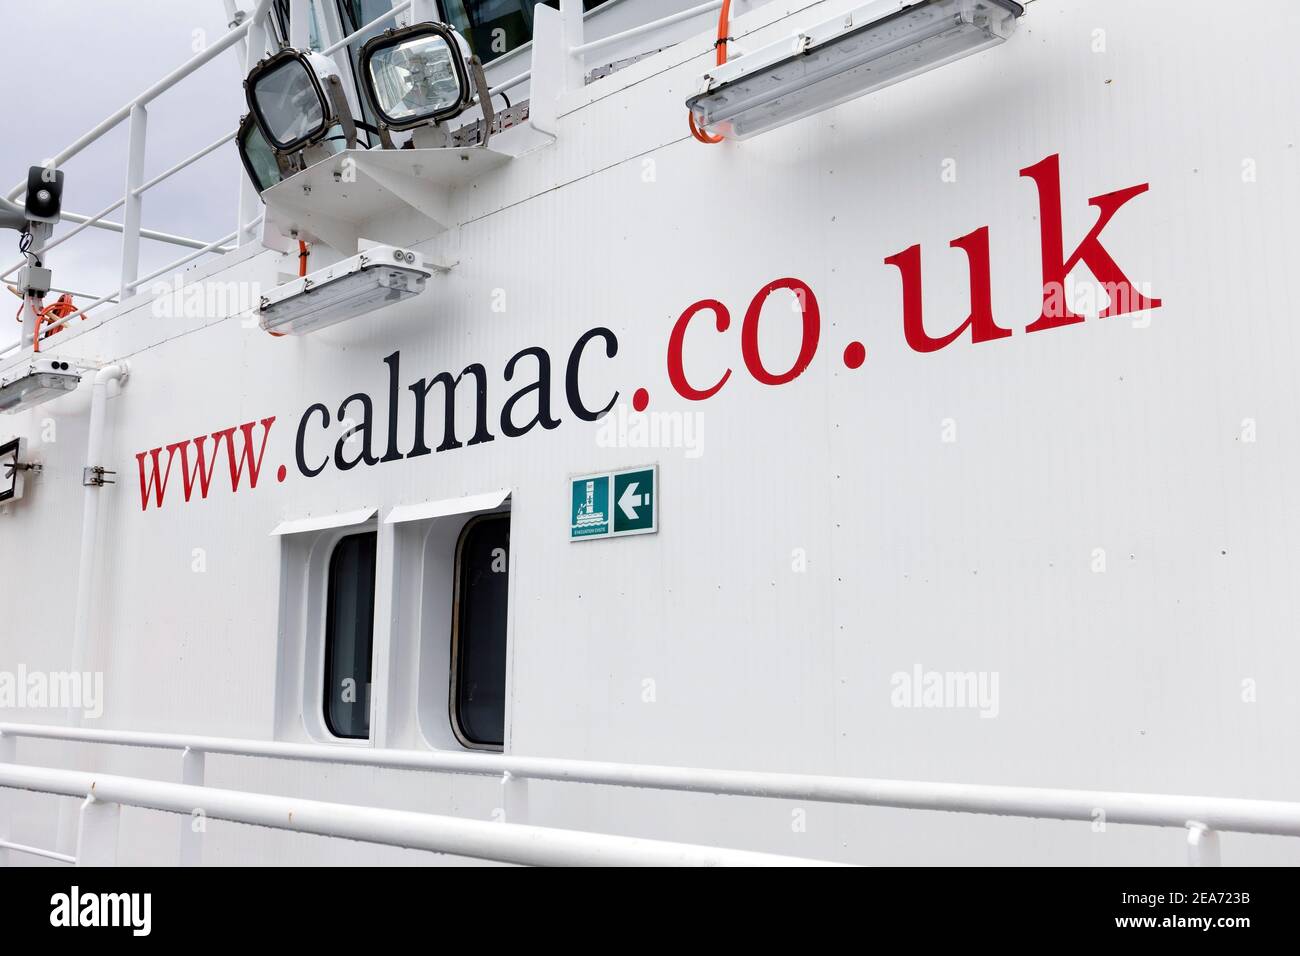 Calmac website address along the outside of a Calmac, caledonian Macbrayne ferry in Scotland Stock Photo